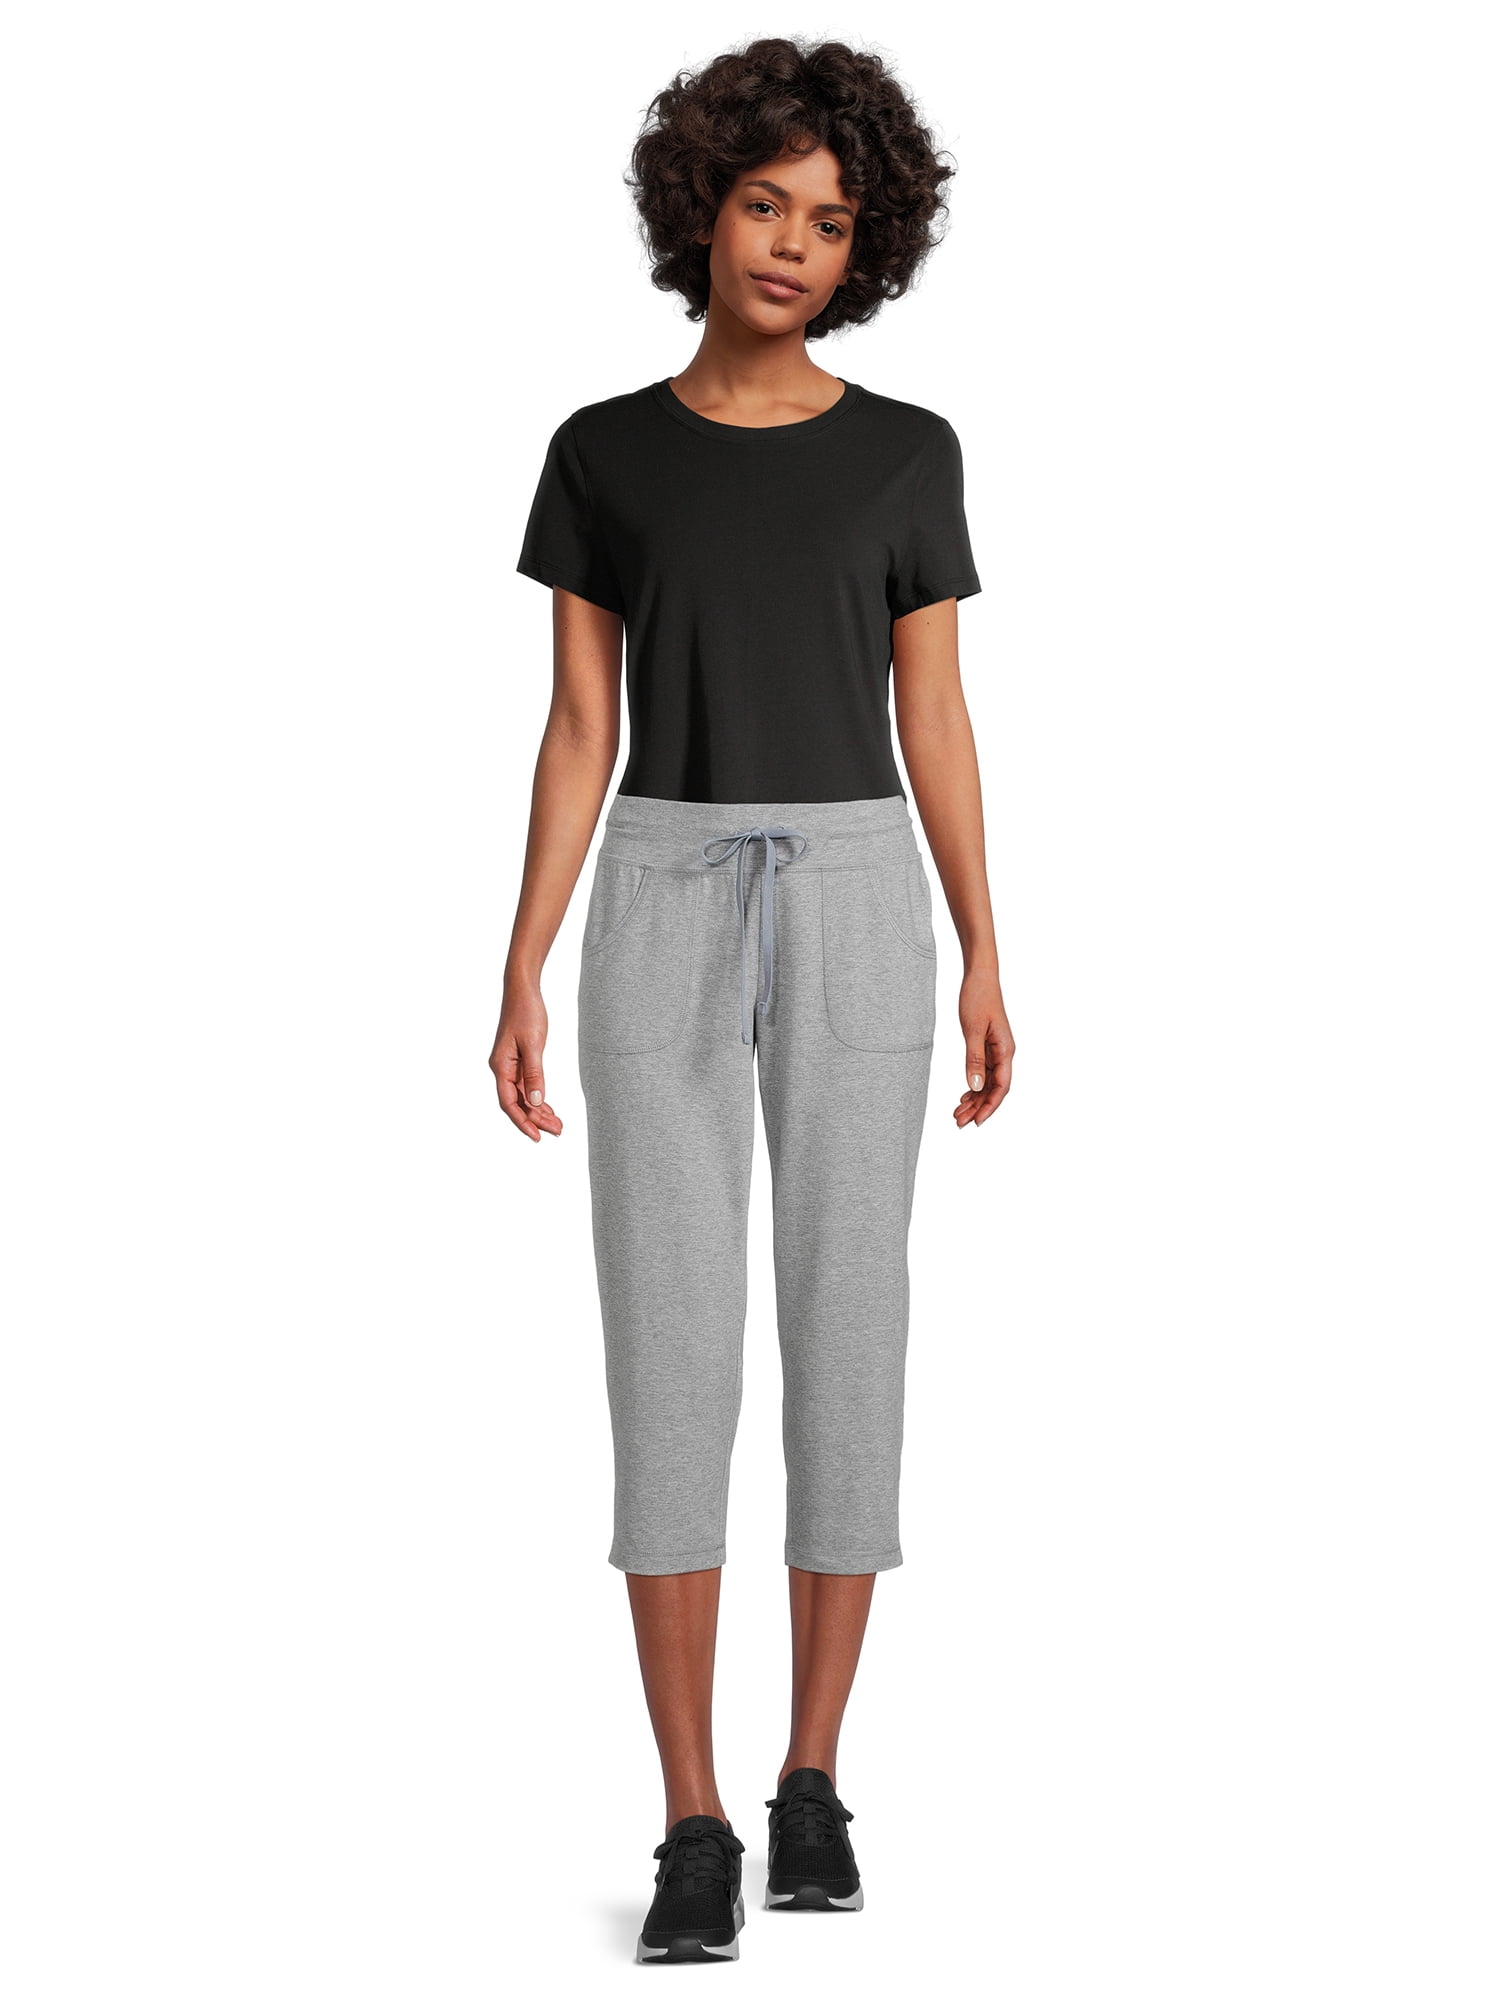 Athletic Works Core Knit Capri Pants, Women's Size XS, Gray NEW